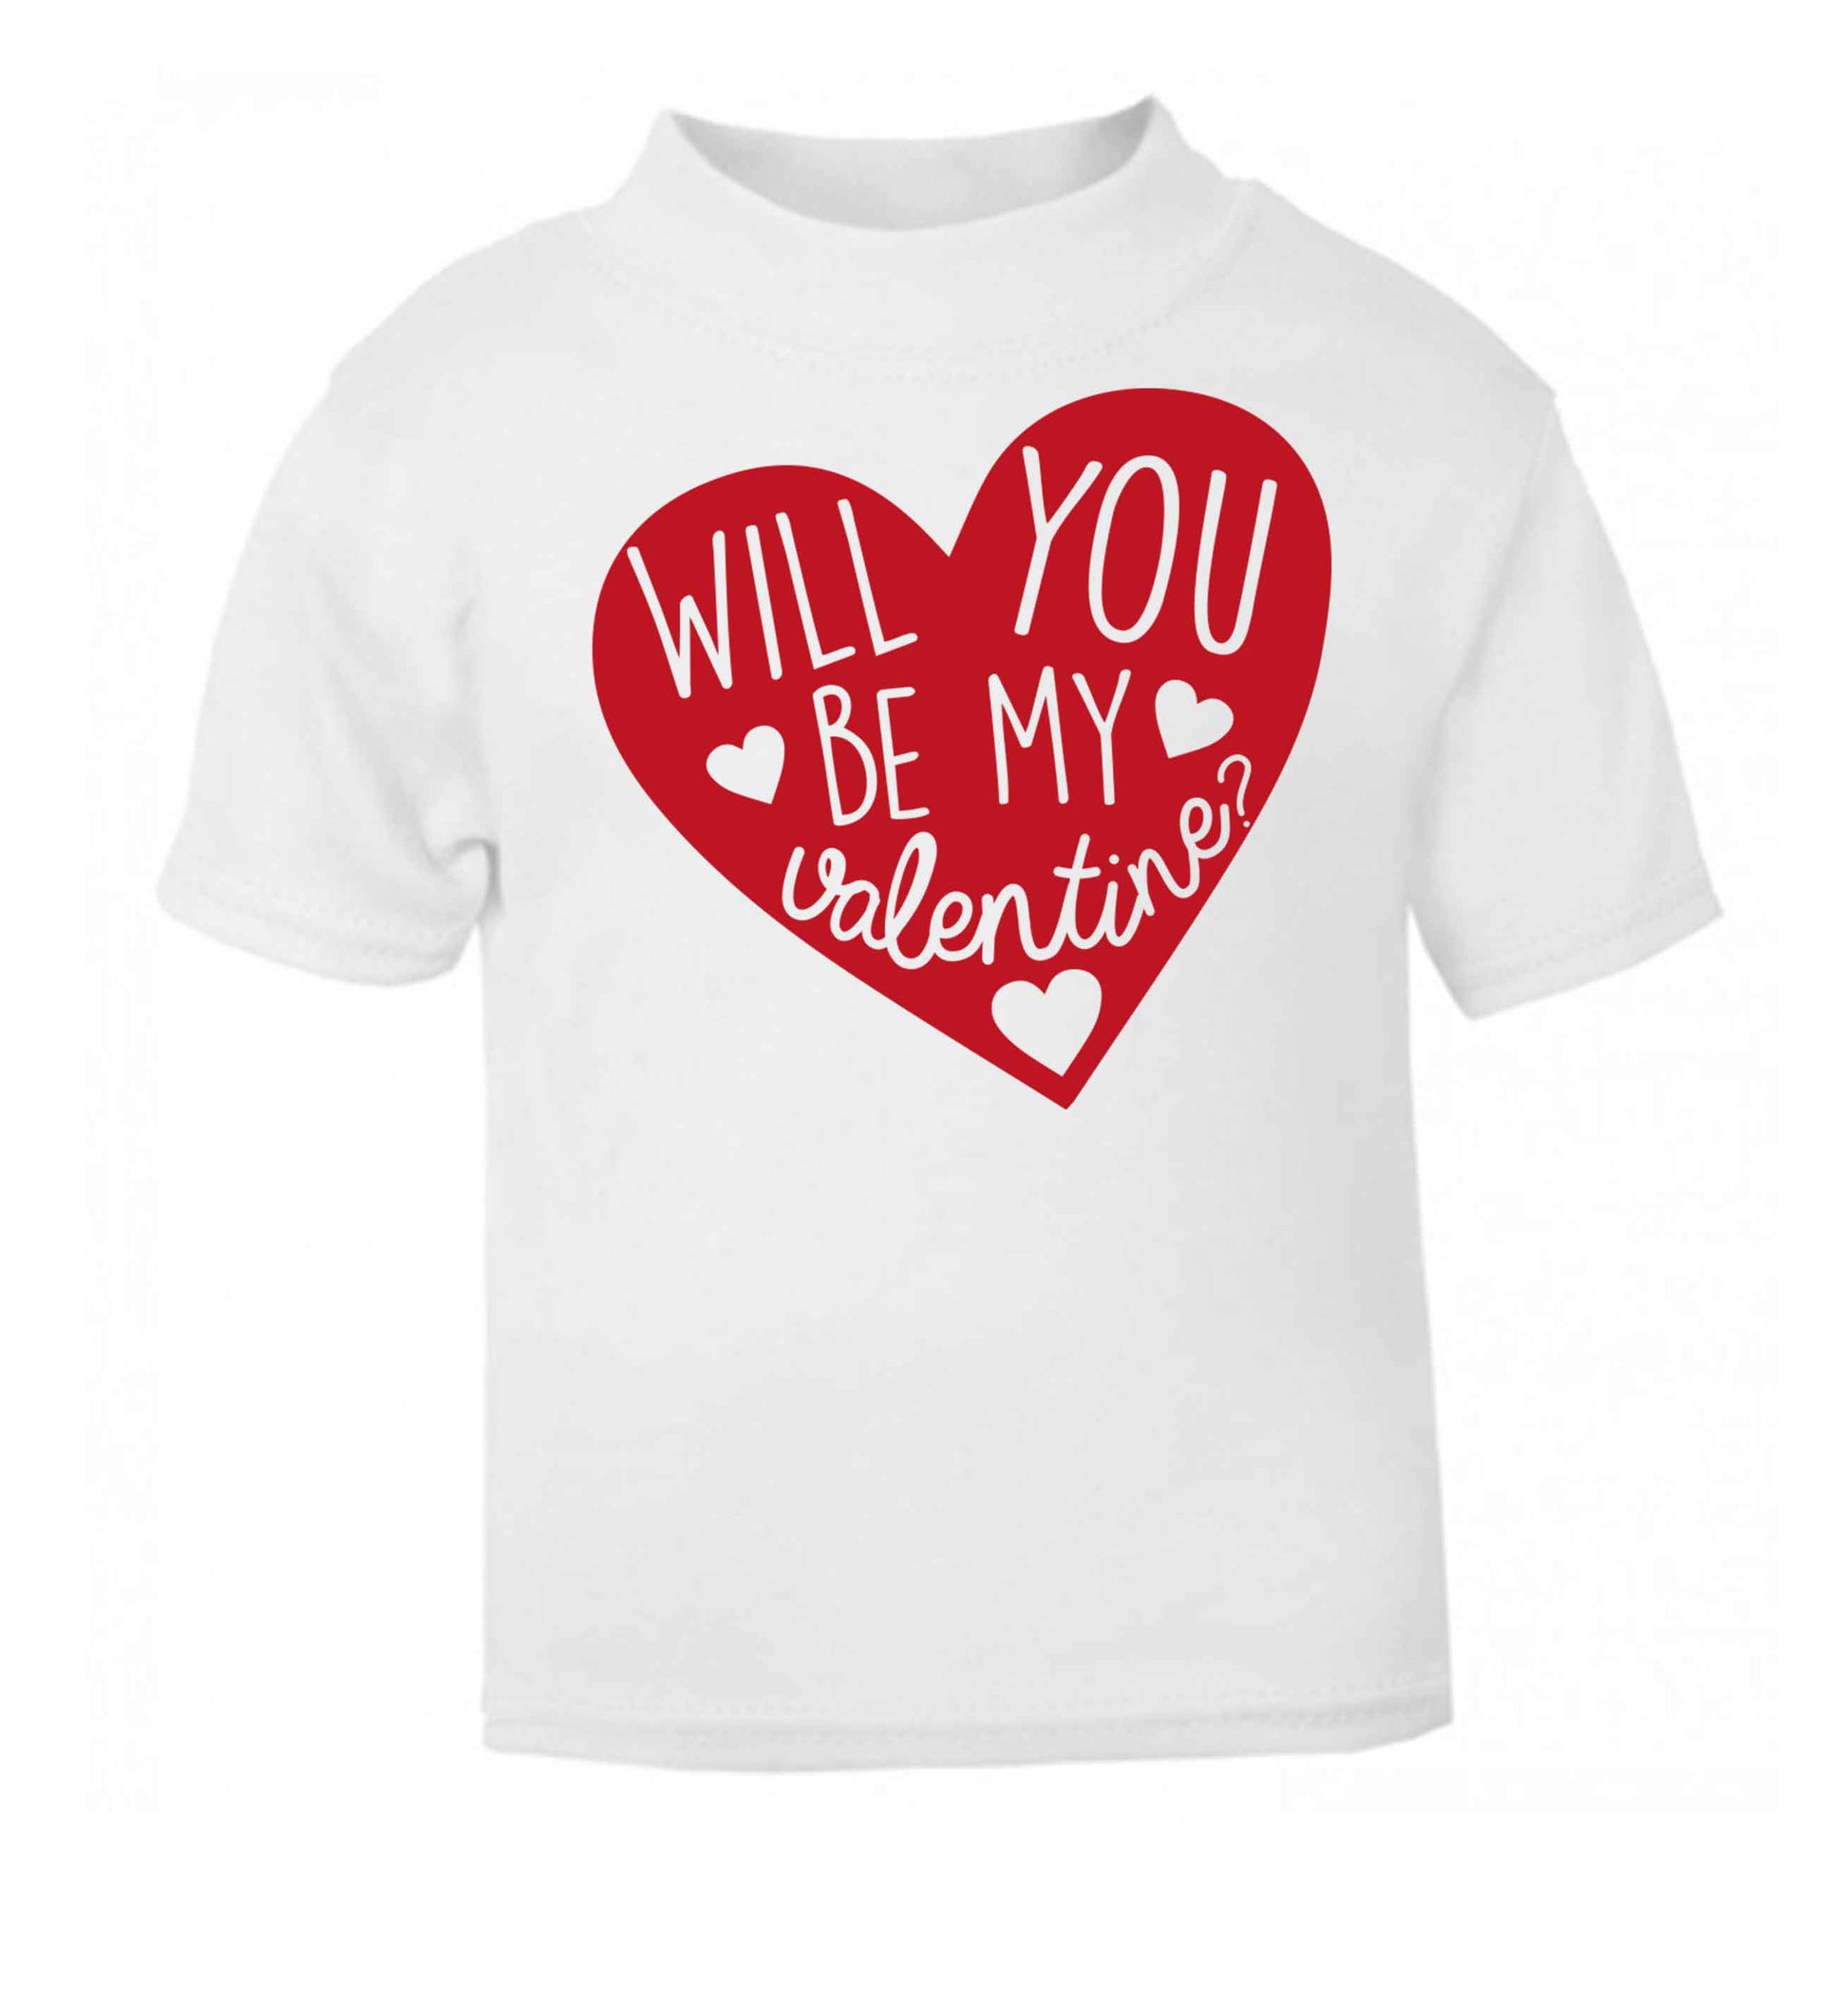 Will you be my valentine? white baby toddler Tshirt 2 Years